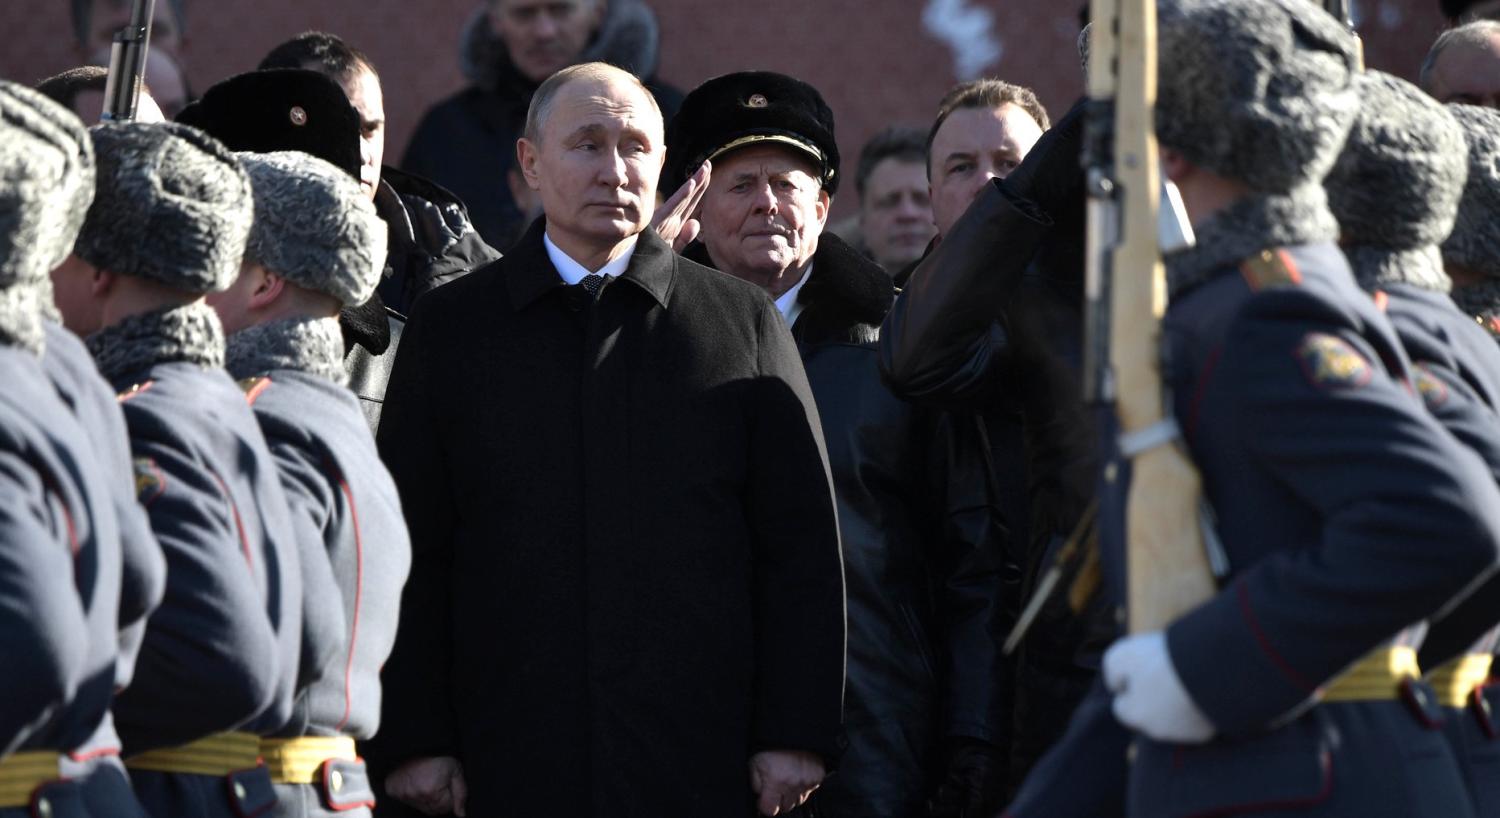 Vladimir Putin at a ceremony in Moscow last week (Photo: Kremlin.ru)